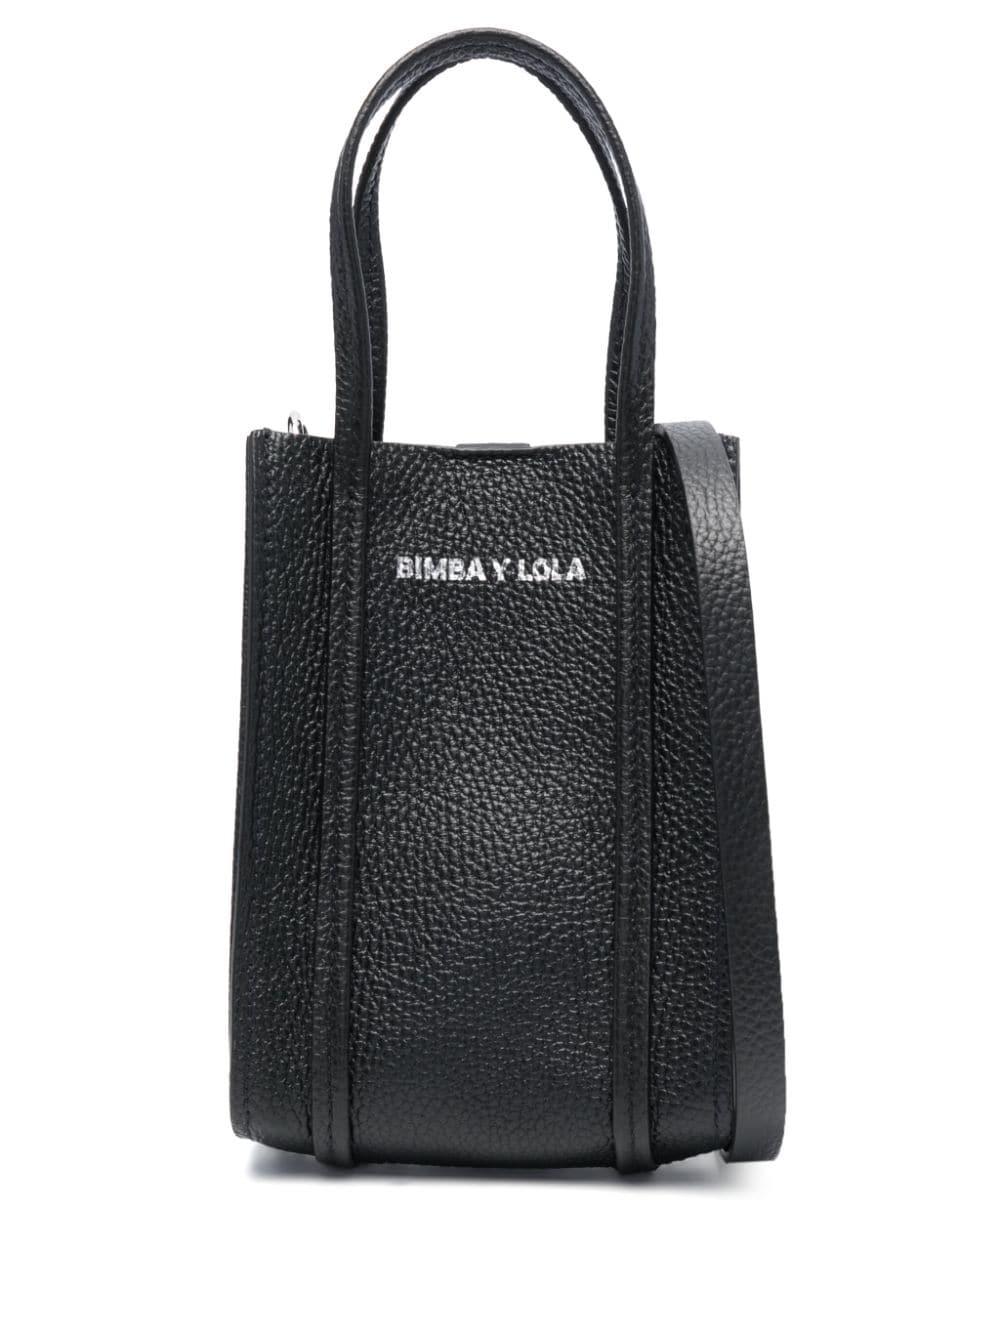 Bimba Y Lola Mini Leather Crossbody Bag in Black